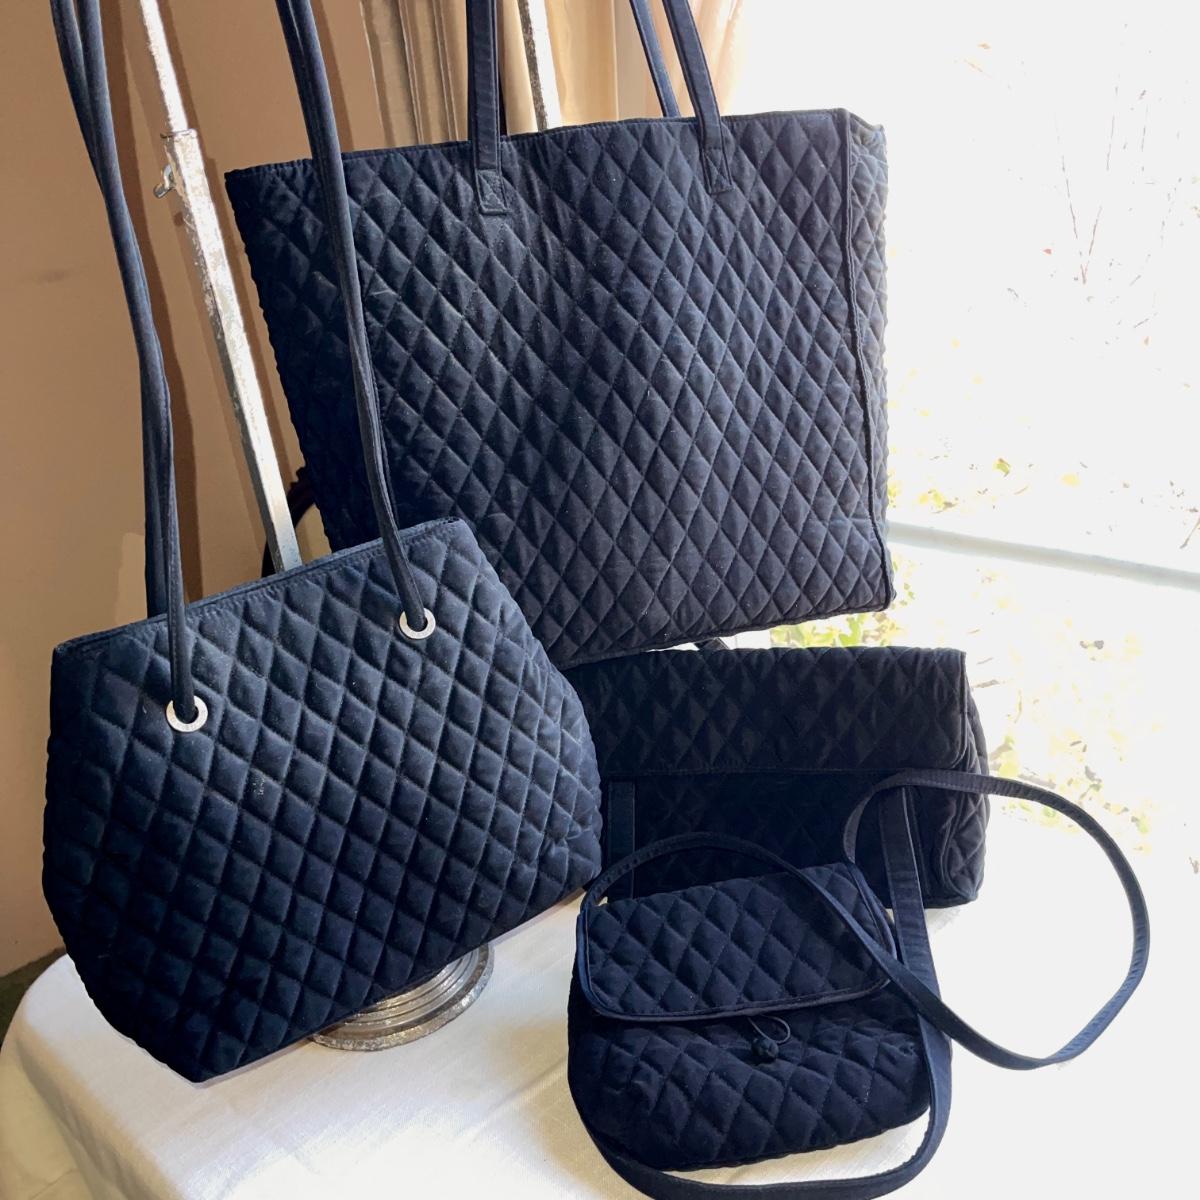 Vera Bradley Classic Black Purse | Black purses, Purses, Classic black